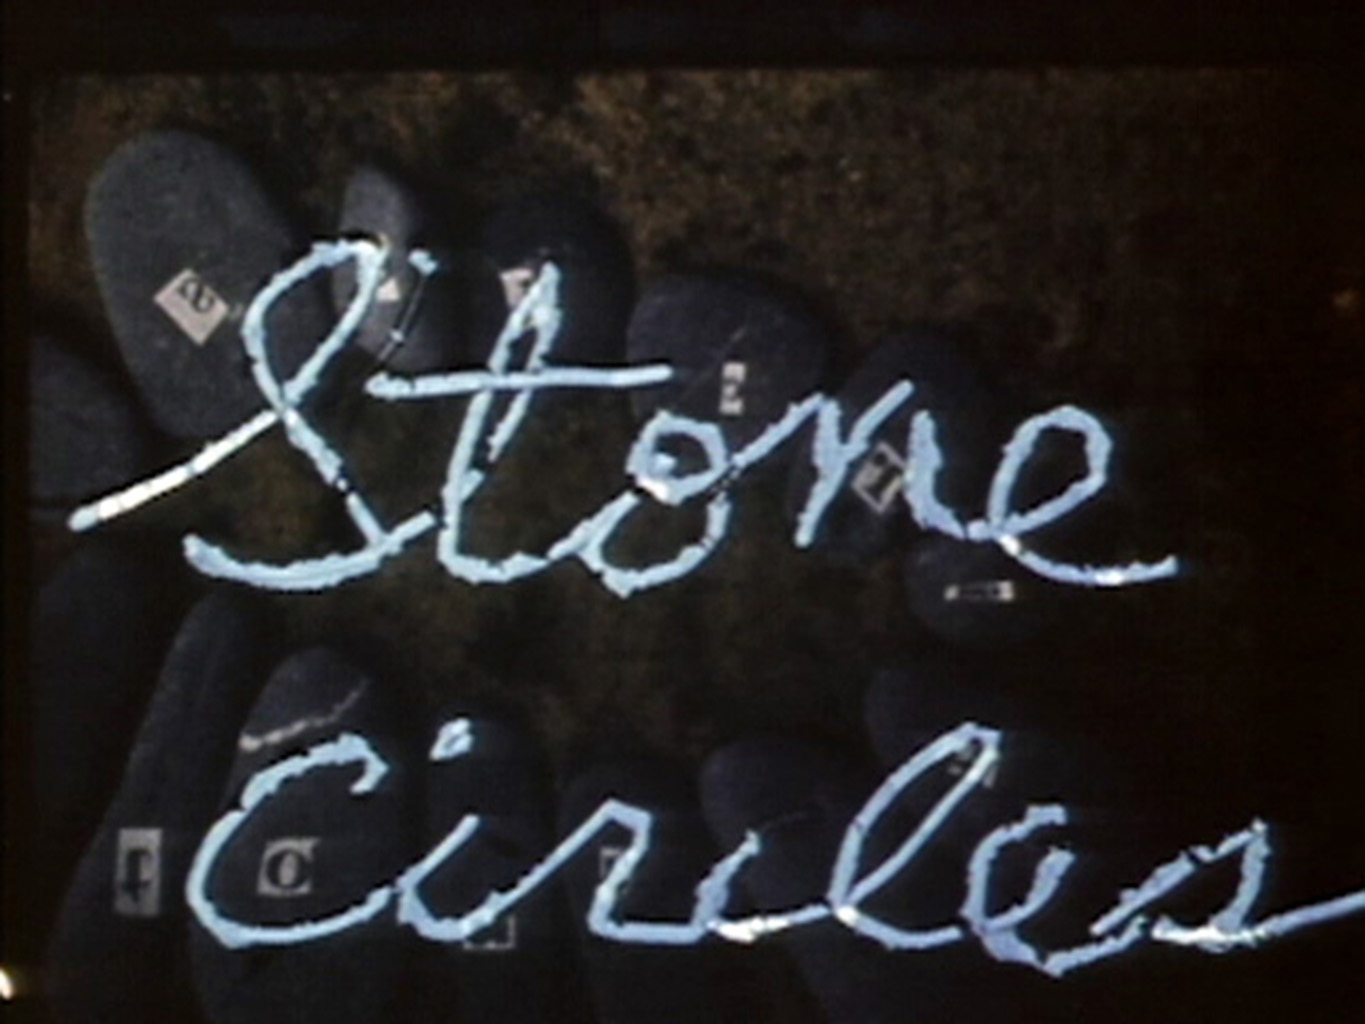 Stone Circles a film by Barbara Hammer